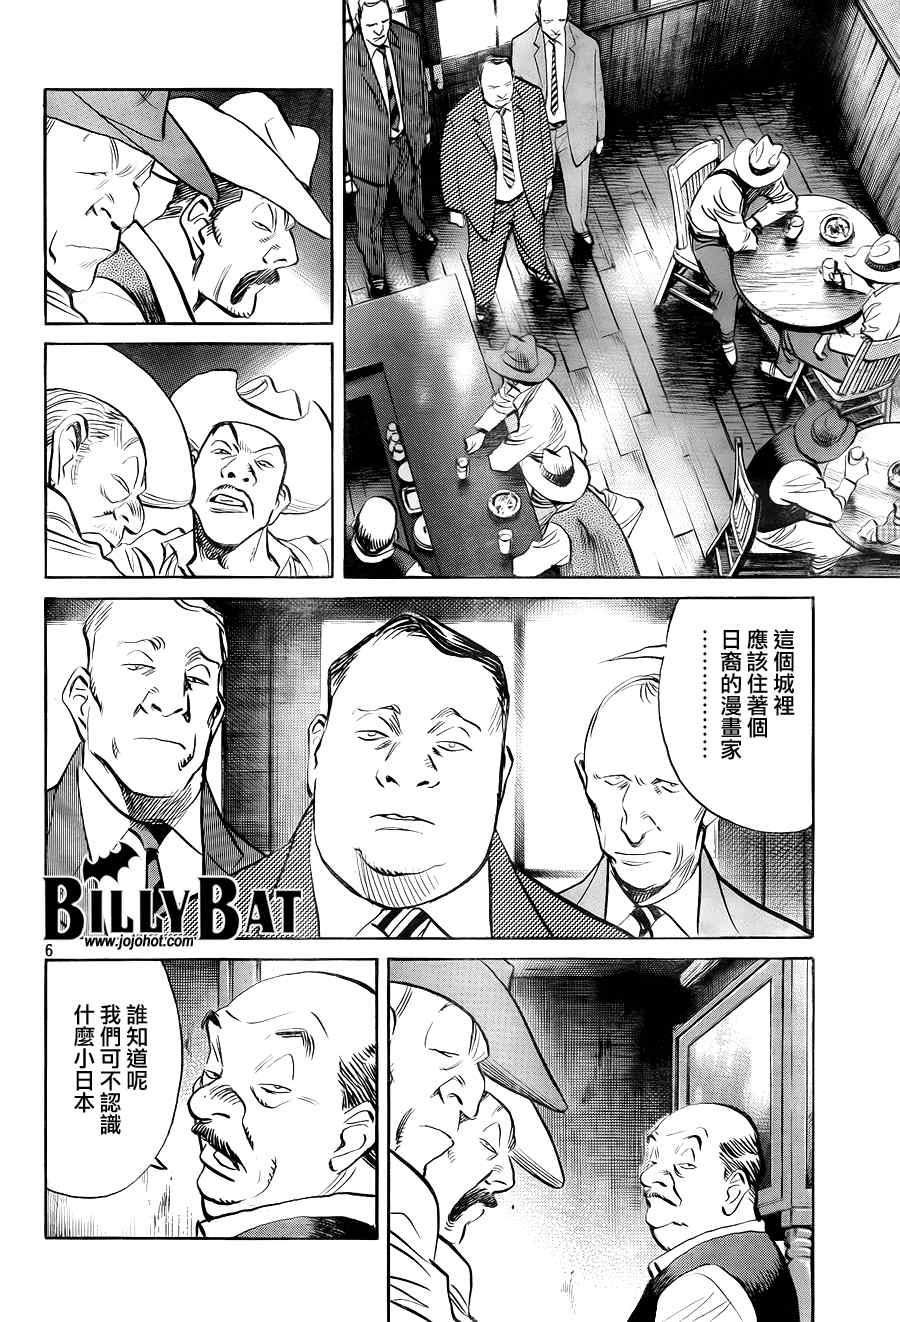 Billy_Bat - 第37話 - 6